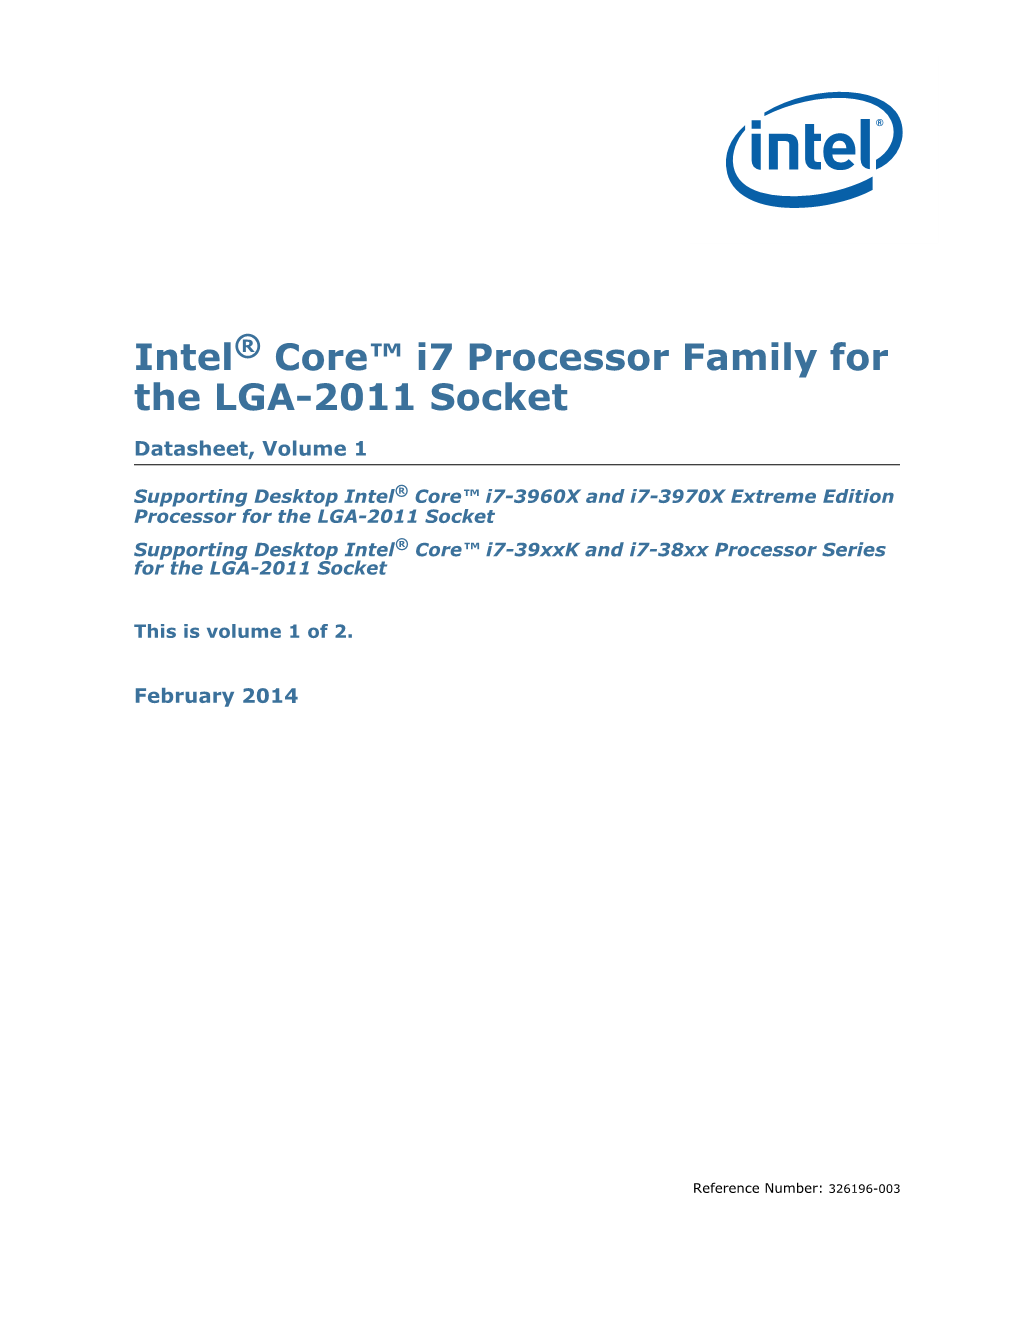 Intel® Core™ I7 Processor Family for the LGA-2011 Socket